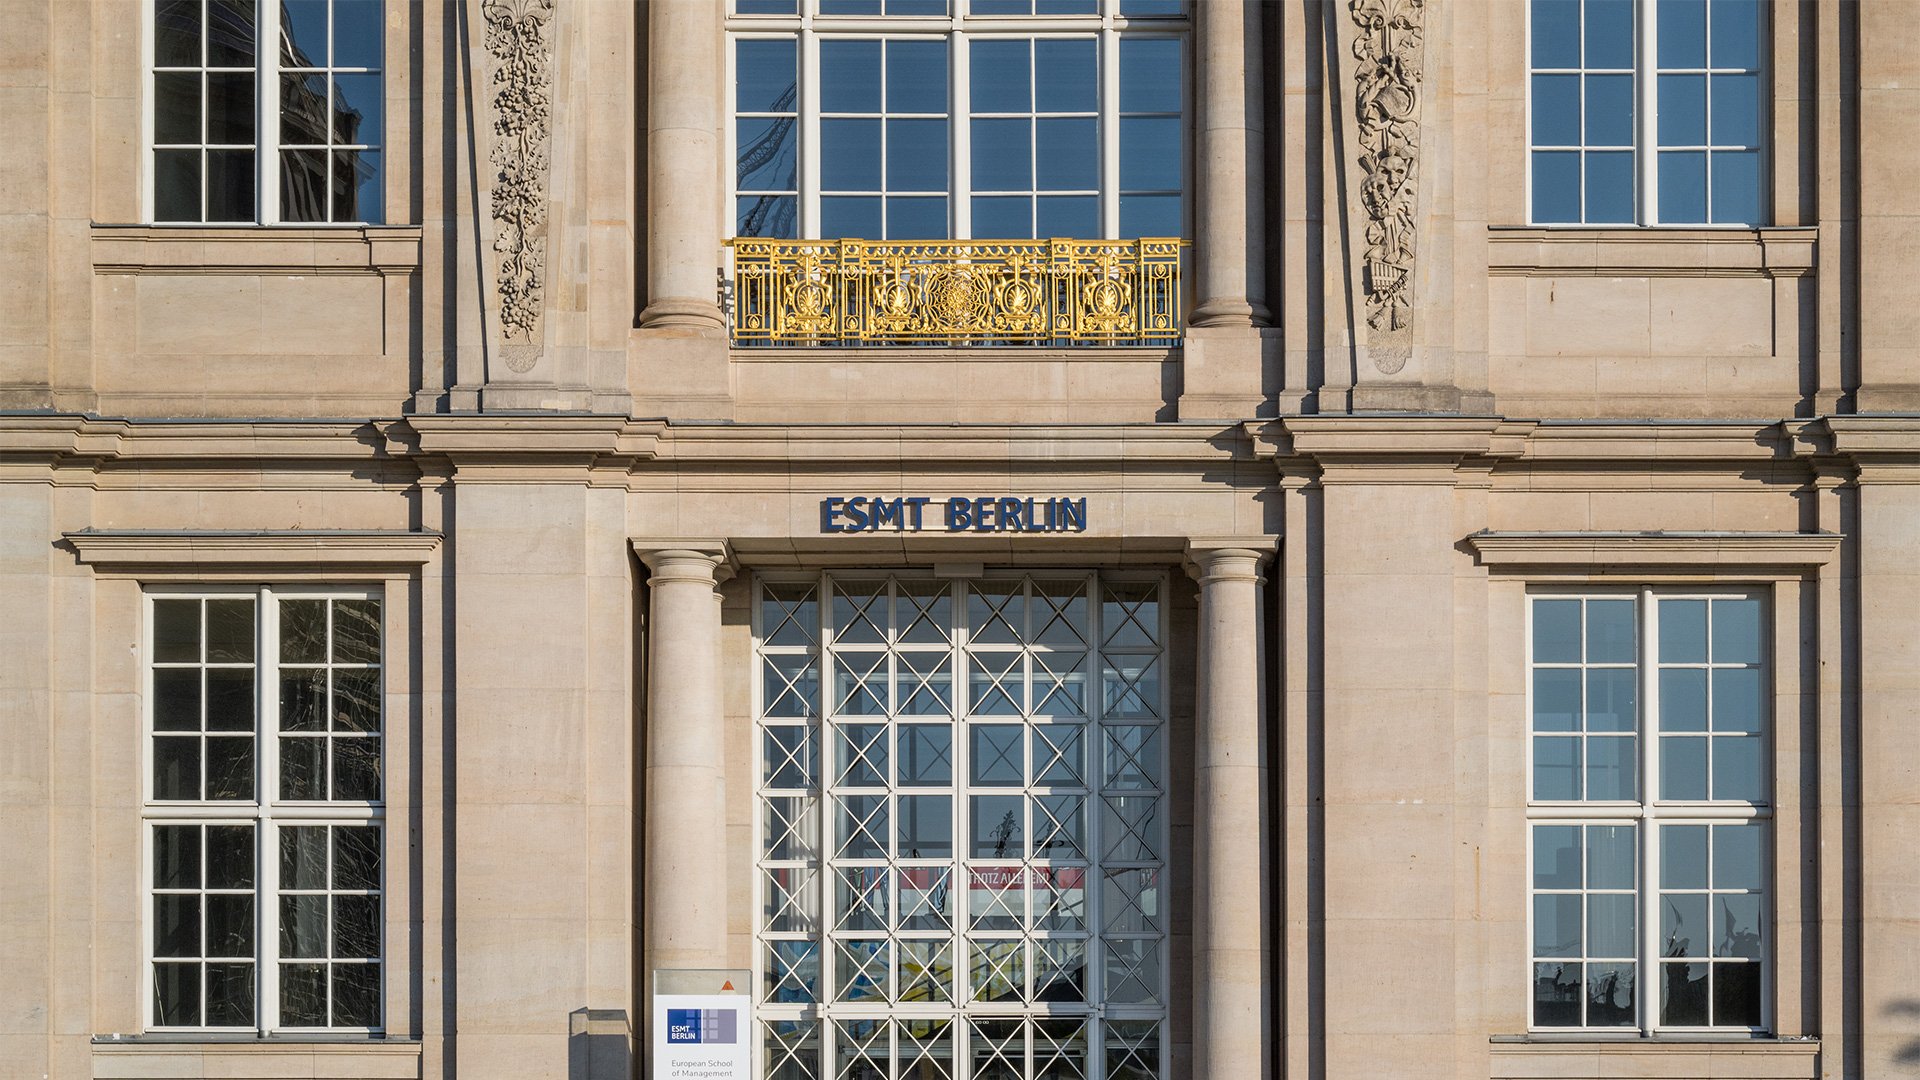 ESMT Berlin Building with lettering